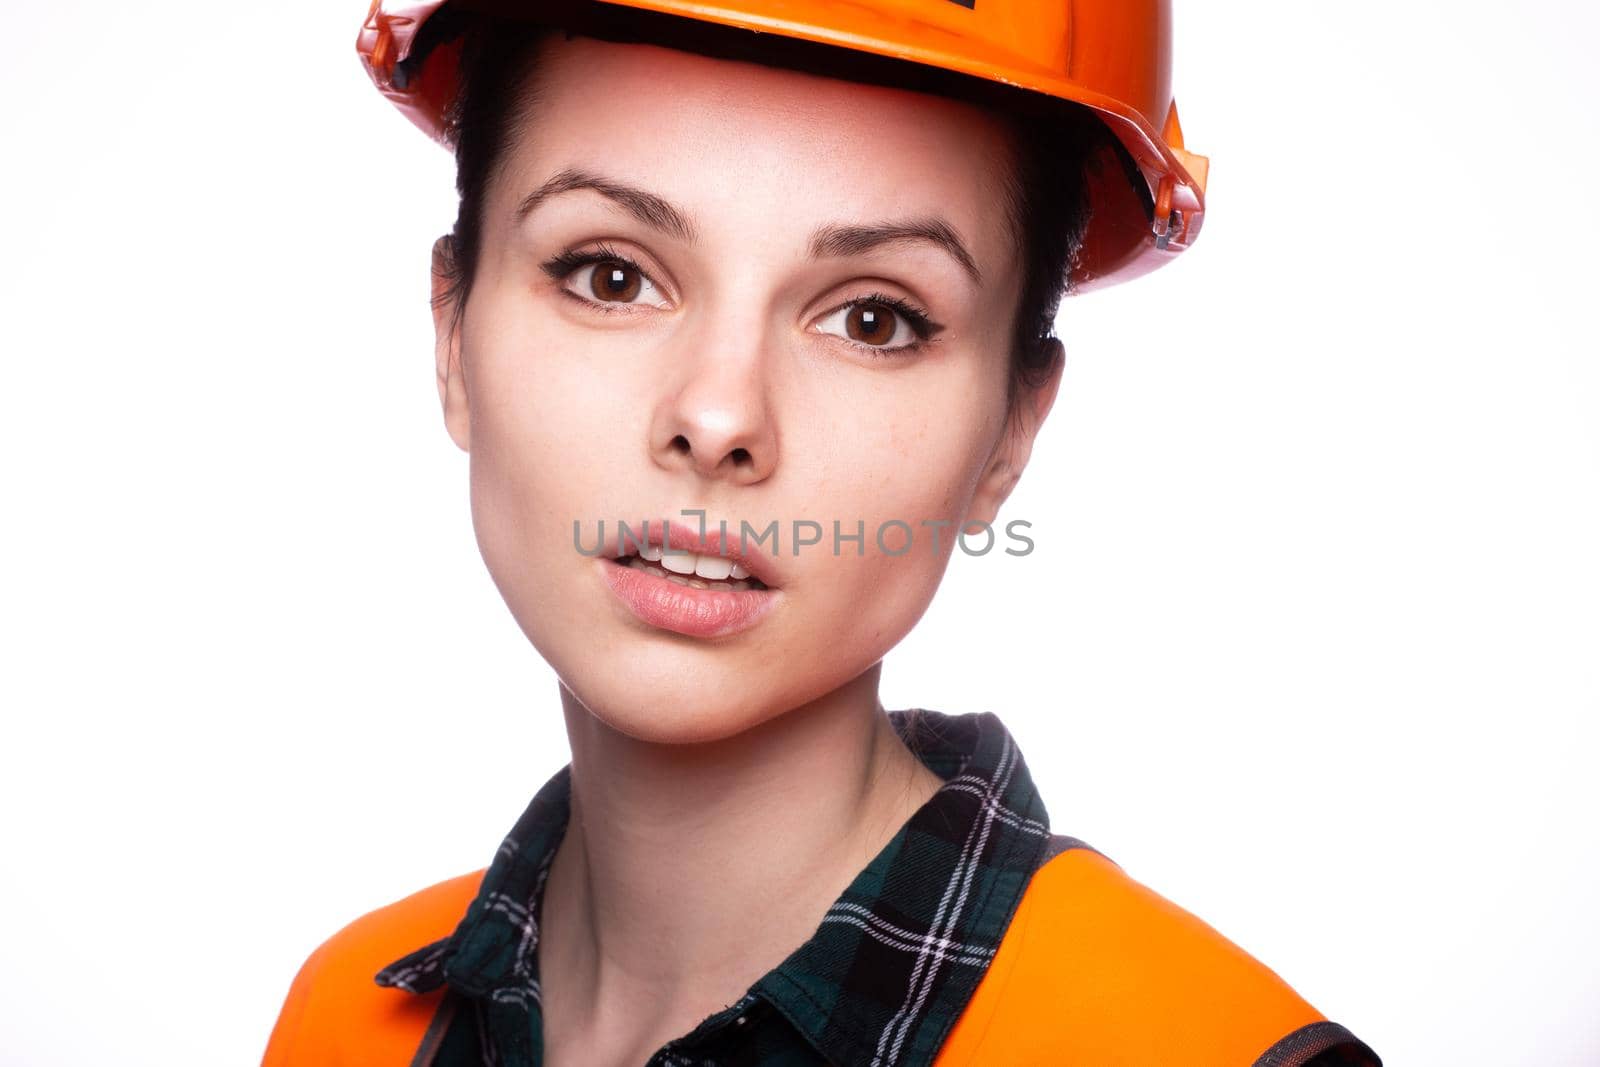 woman in construction safety helmet and orange vest, close-up portrait by shilovskaya